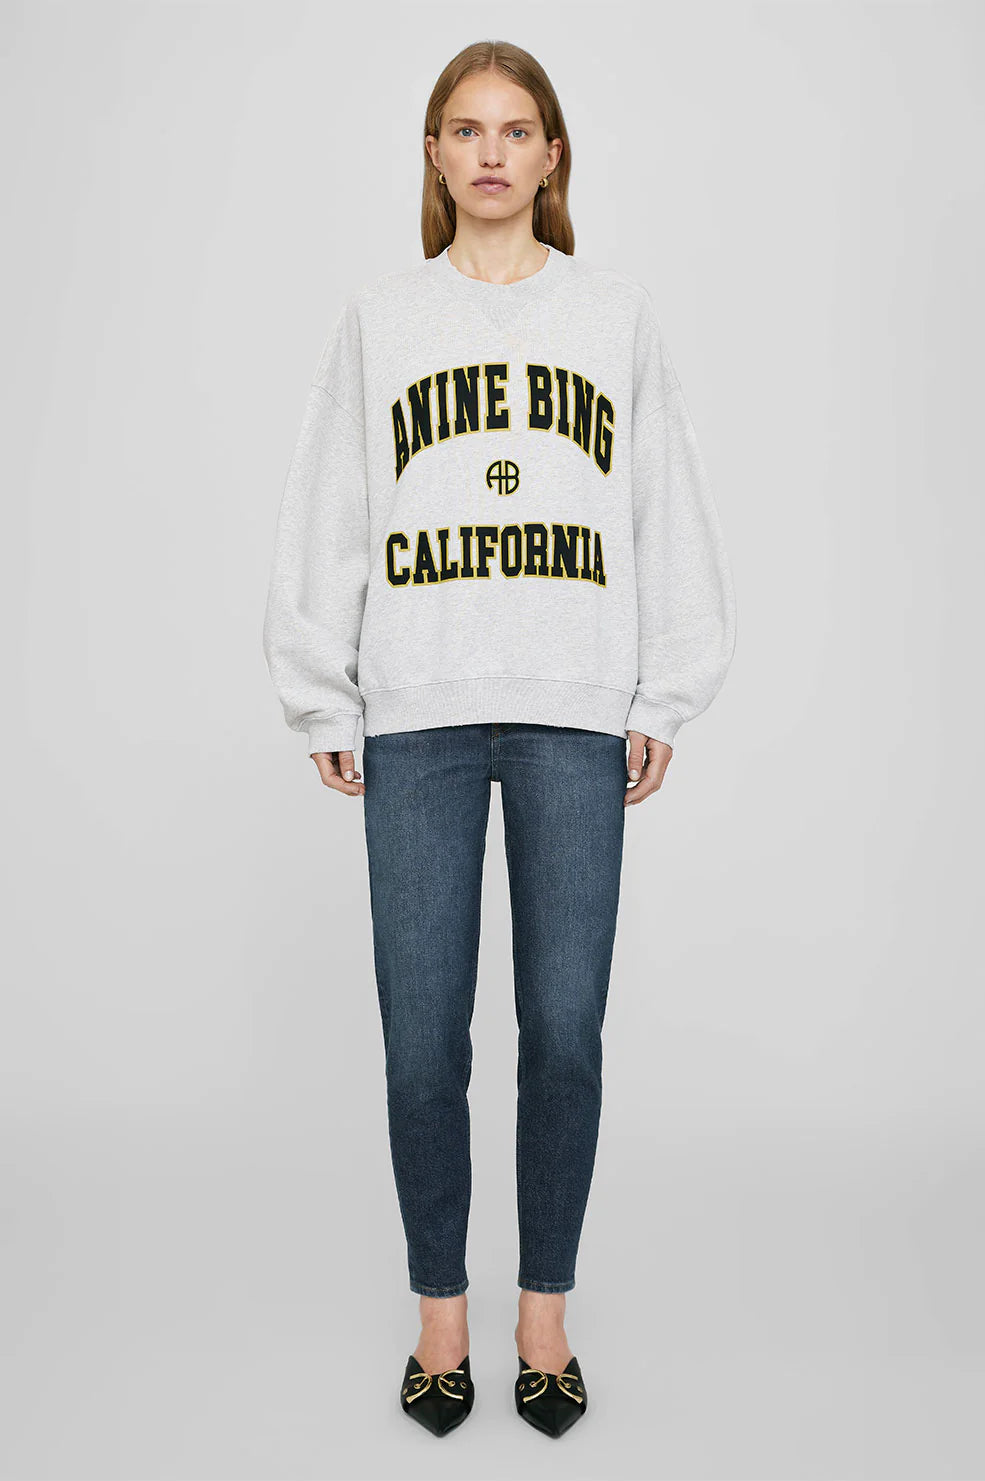 Anine Bing - Jaci Sweatshirt Anine Bing California